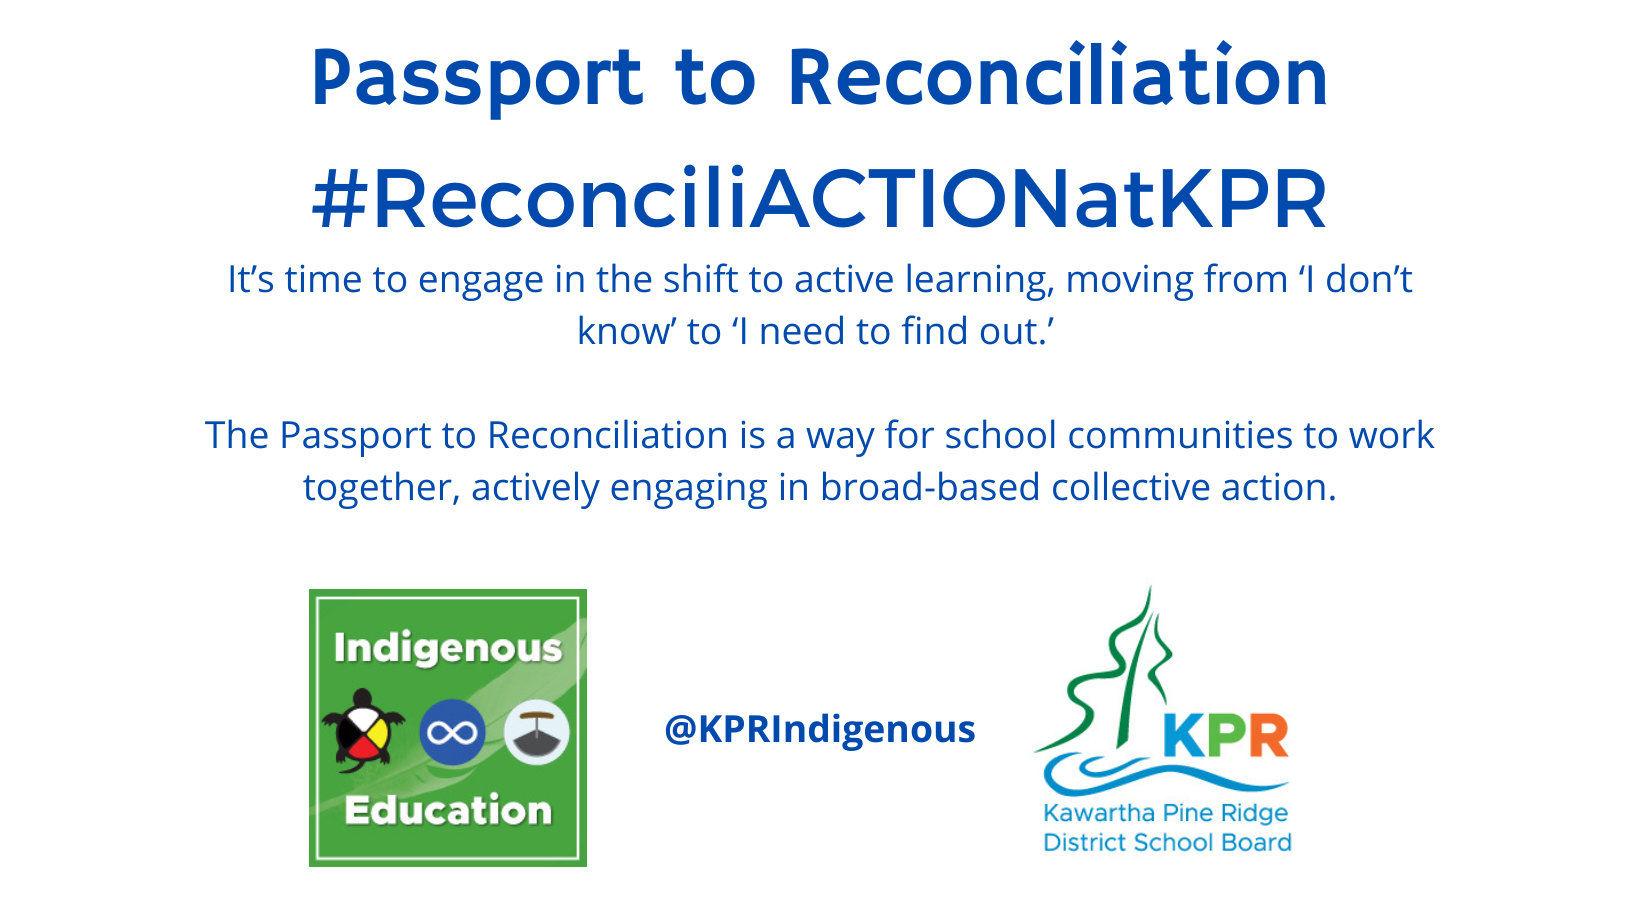 Passport to Reconciliation at KPR